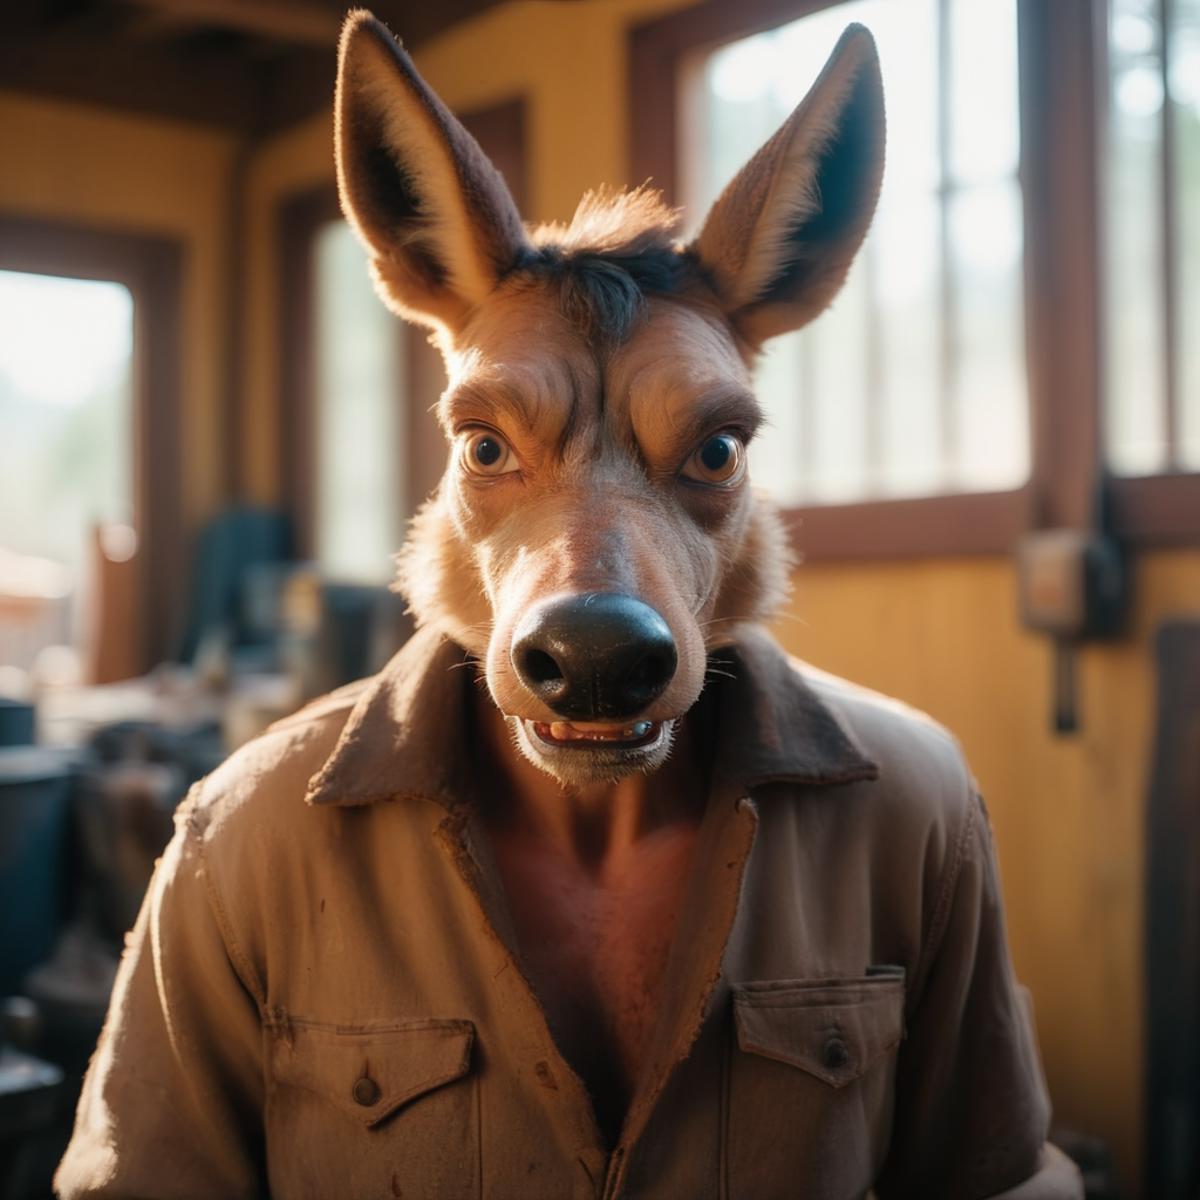 A man wearing a deer head mask with a brown shirt.